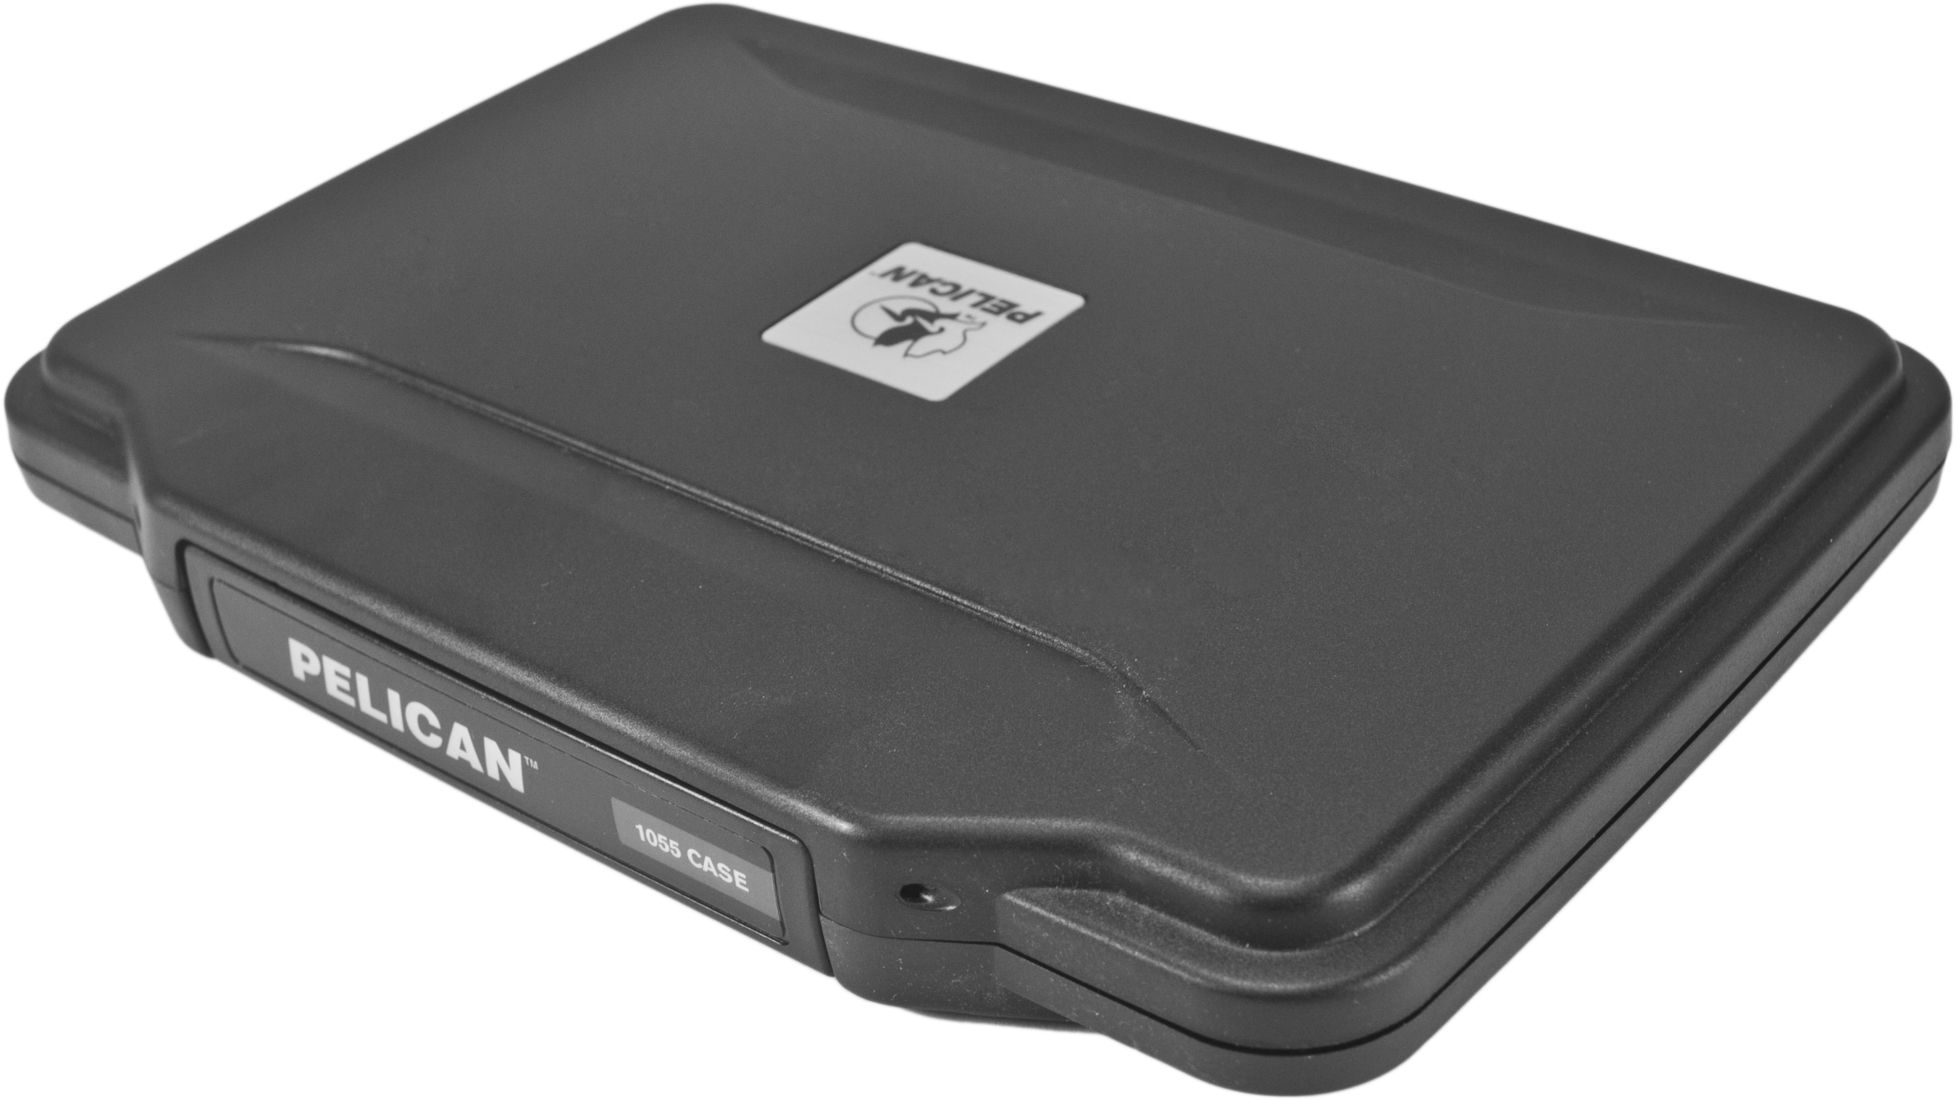 Pelican 1055CC Hardback eReader Case w/ Liner for 7in Tablet Computers